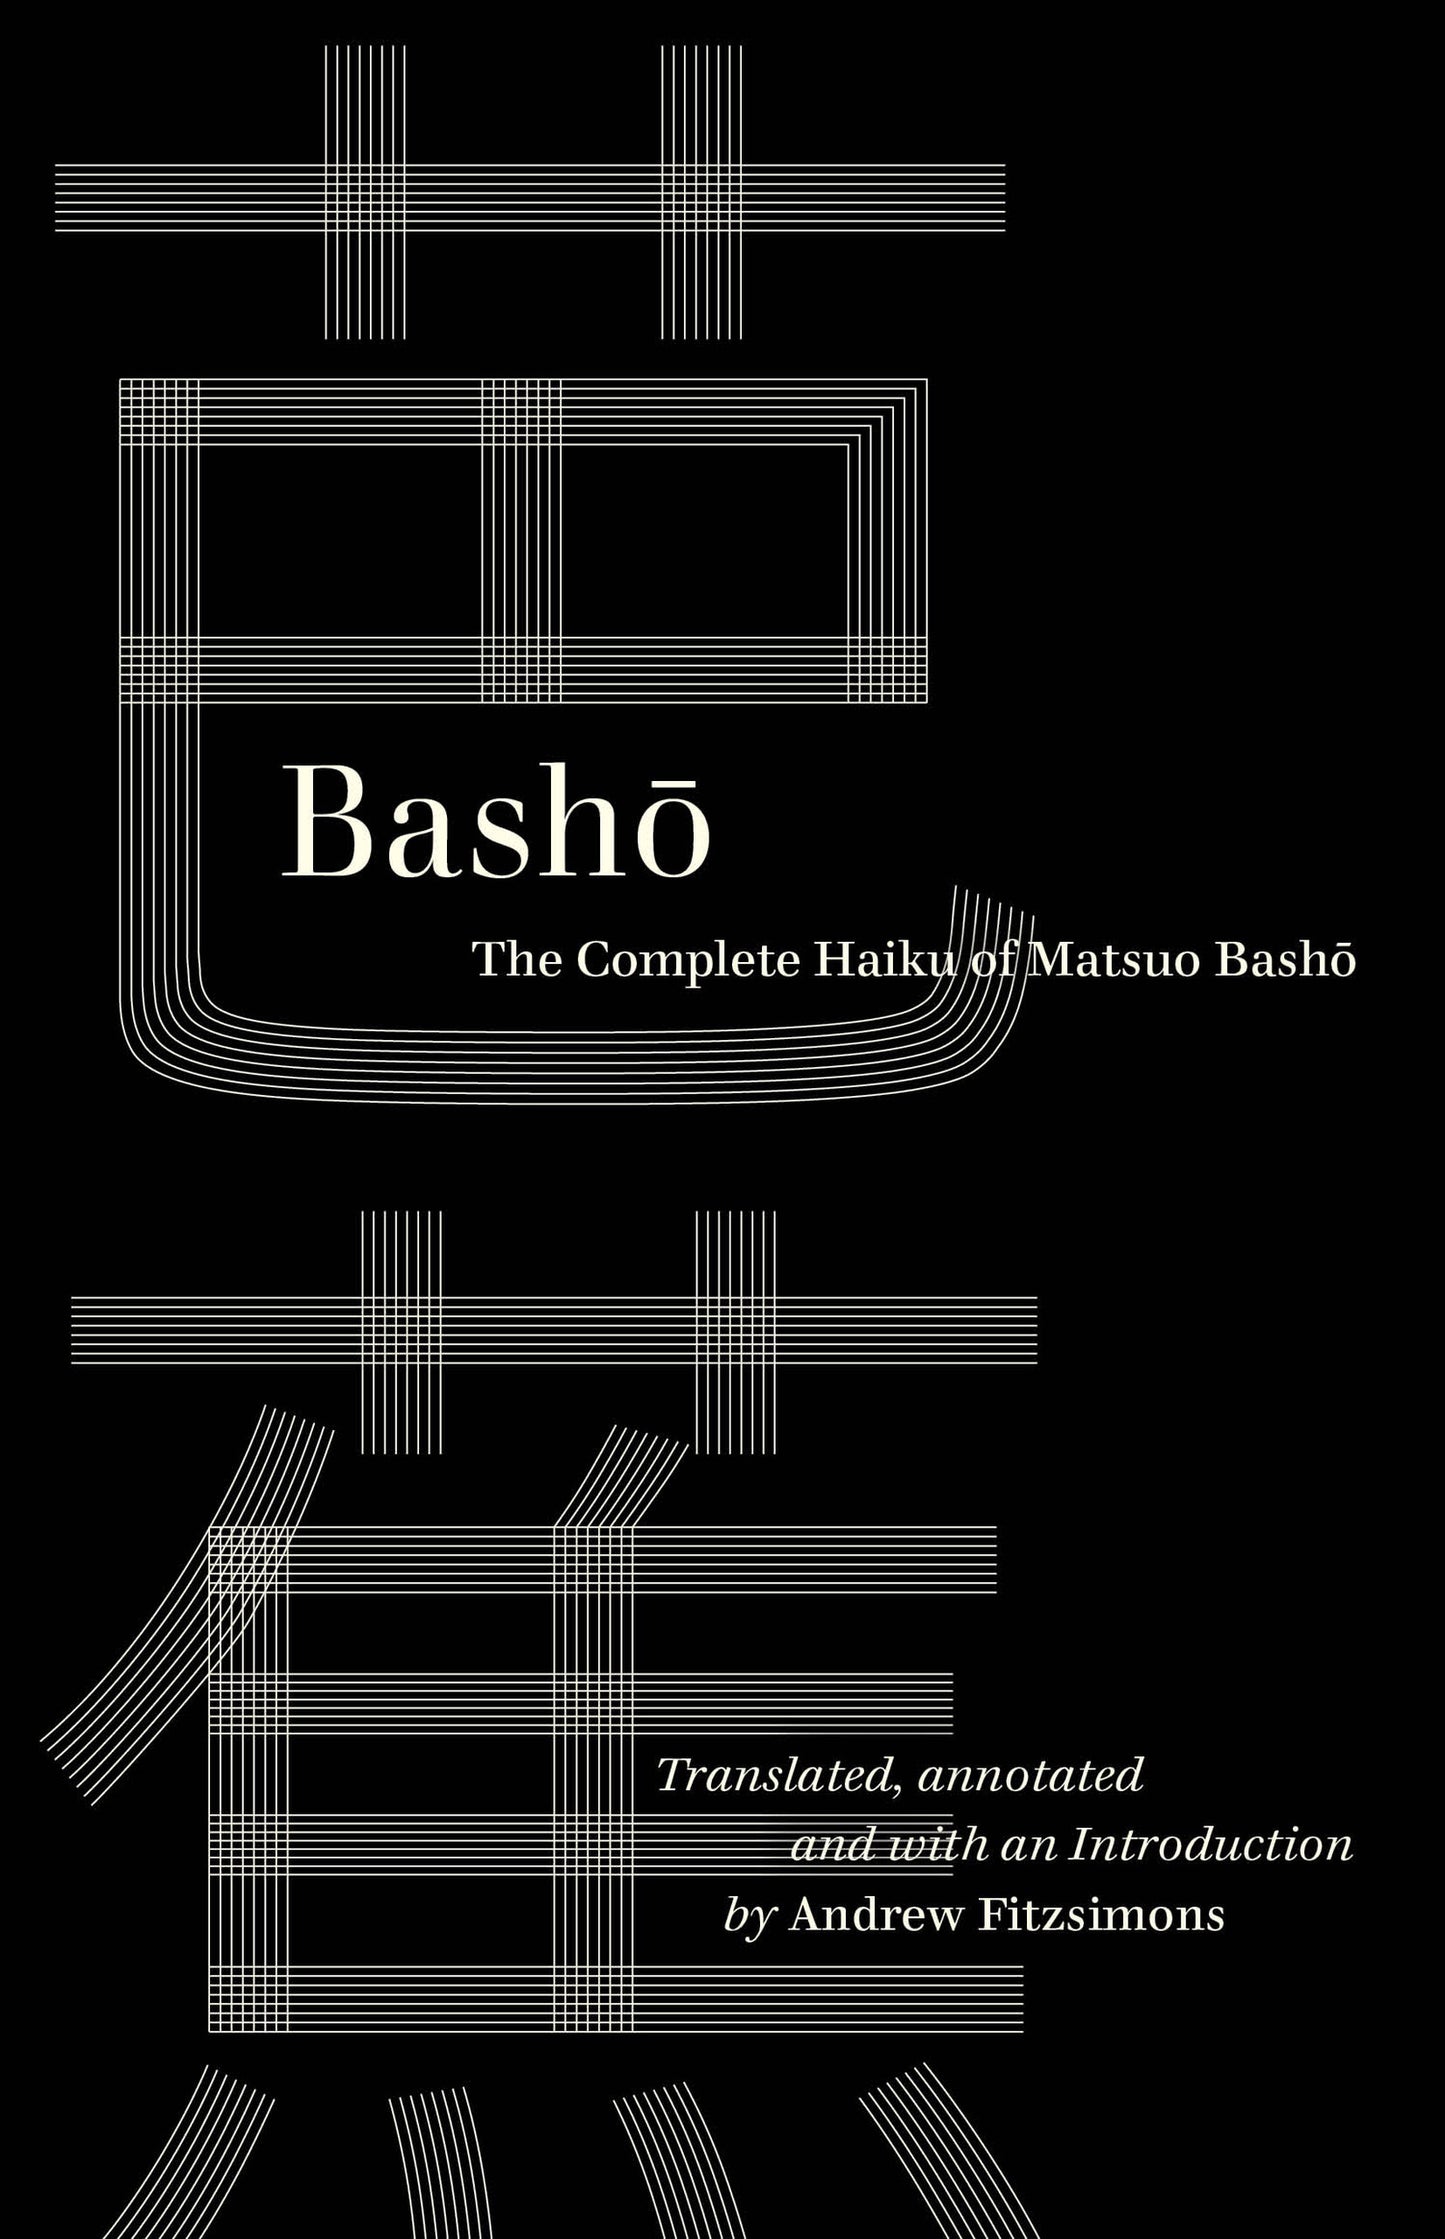 The Complete Haiku of Matsuo Basho